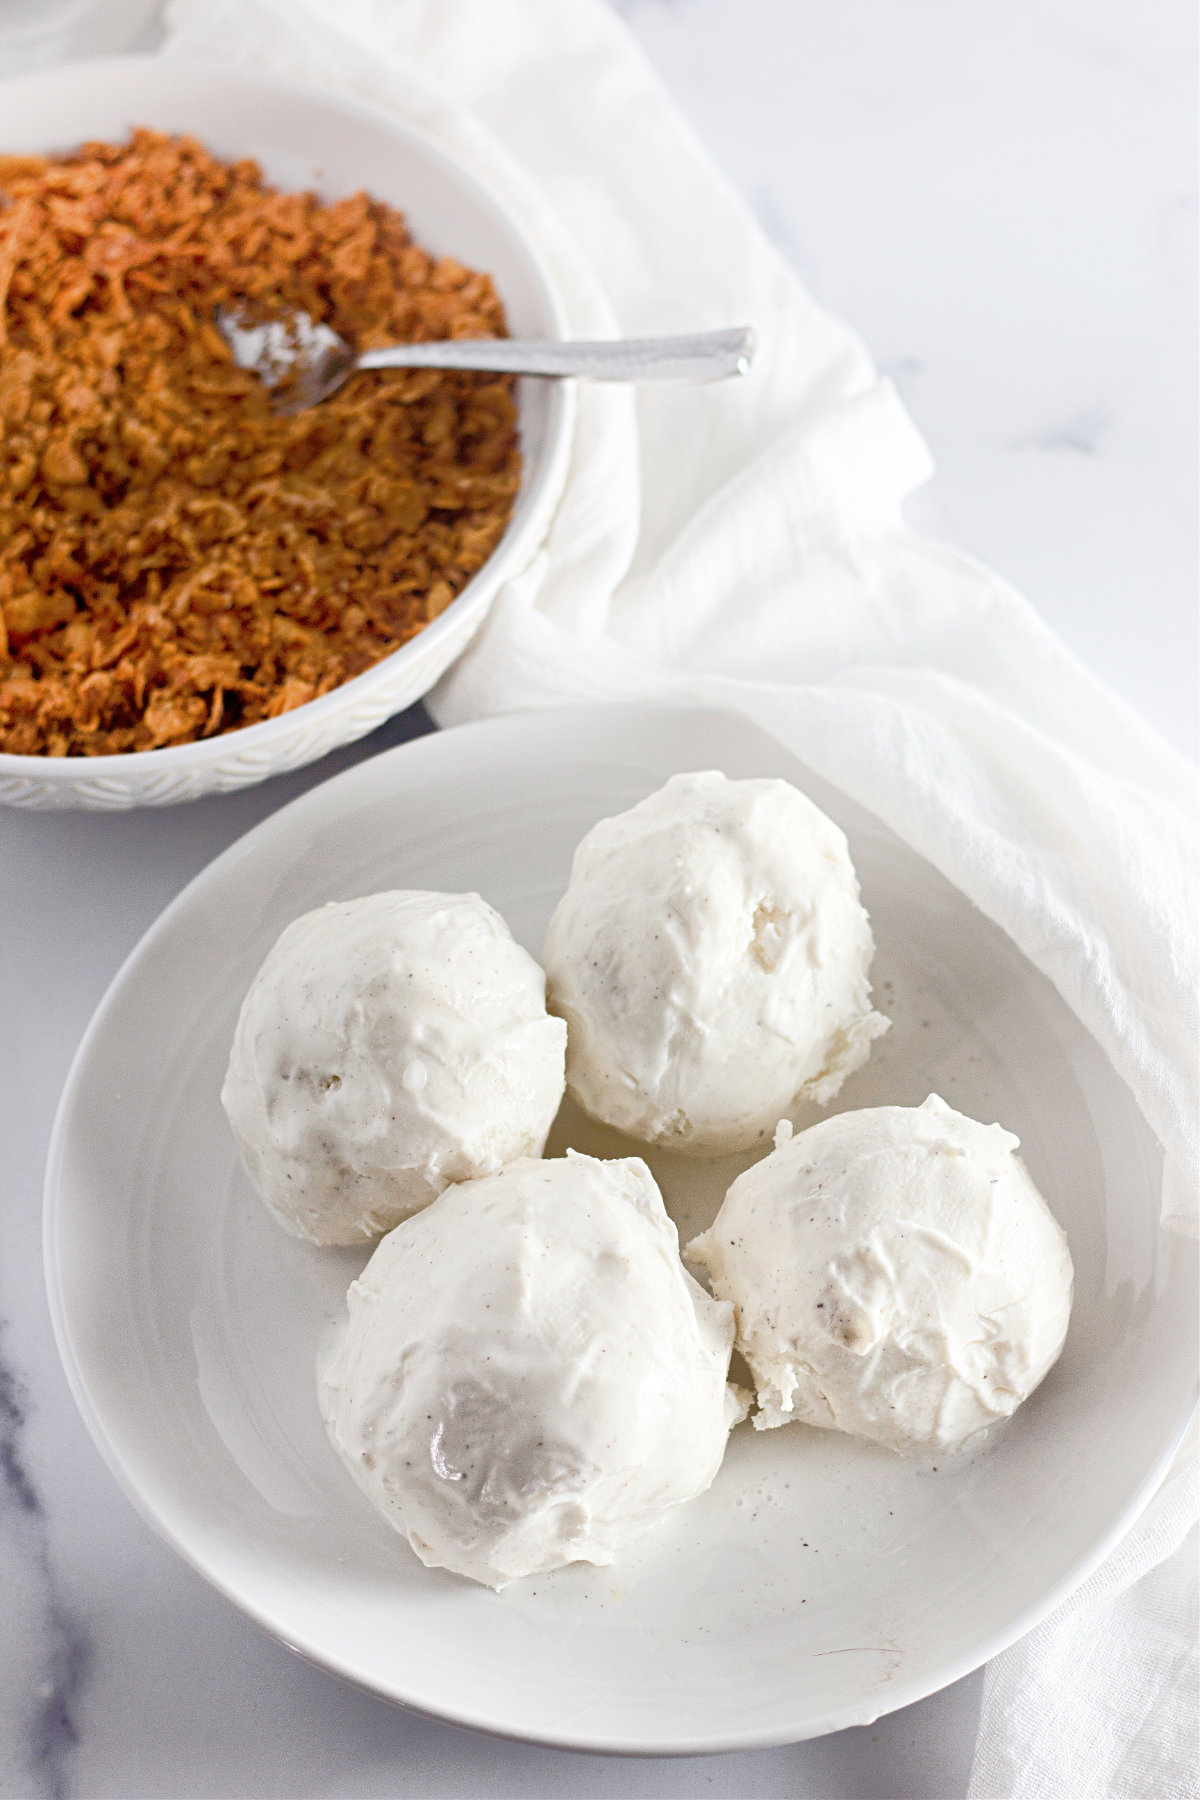 Ice Cream Balls Recipe: How to Make It